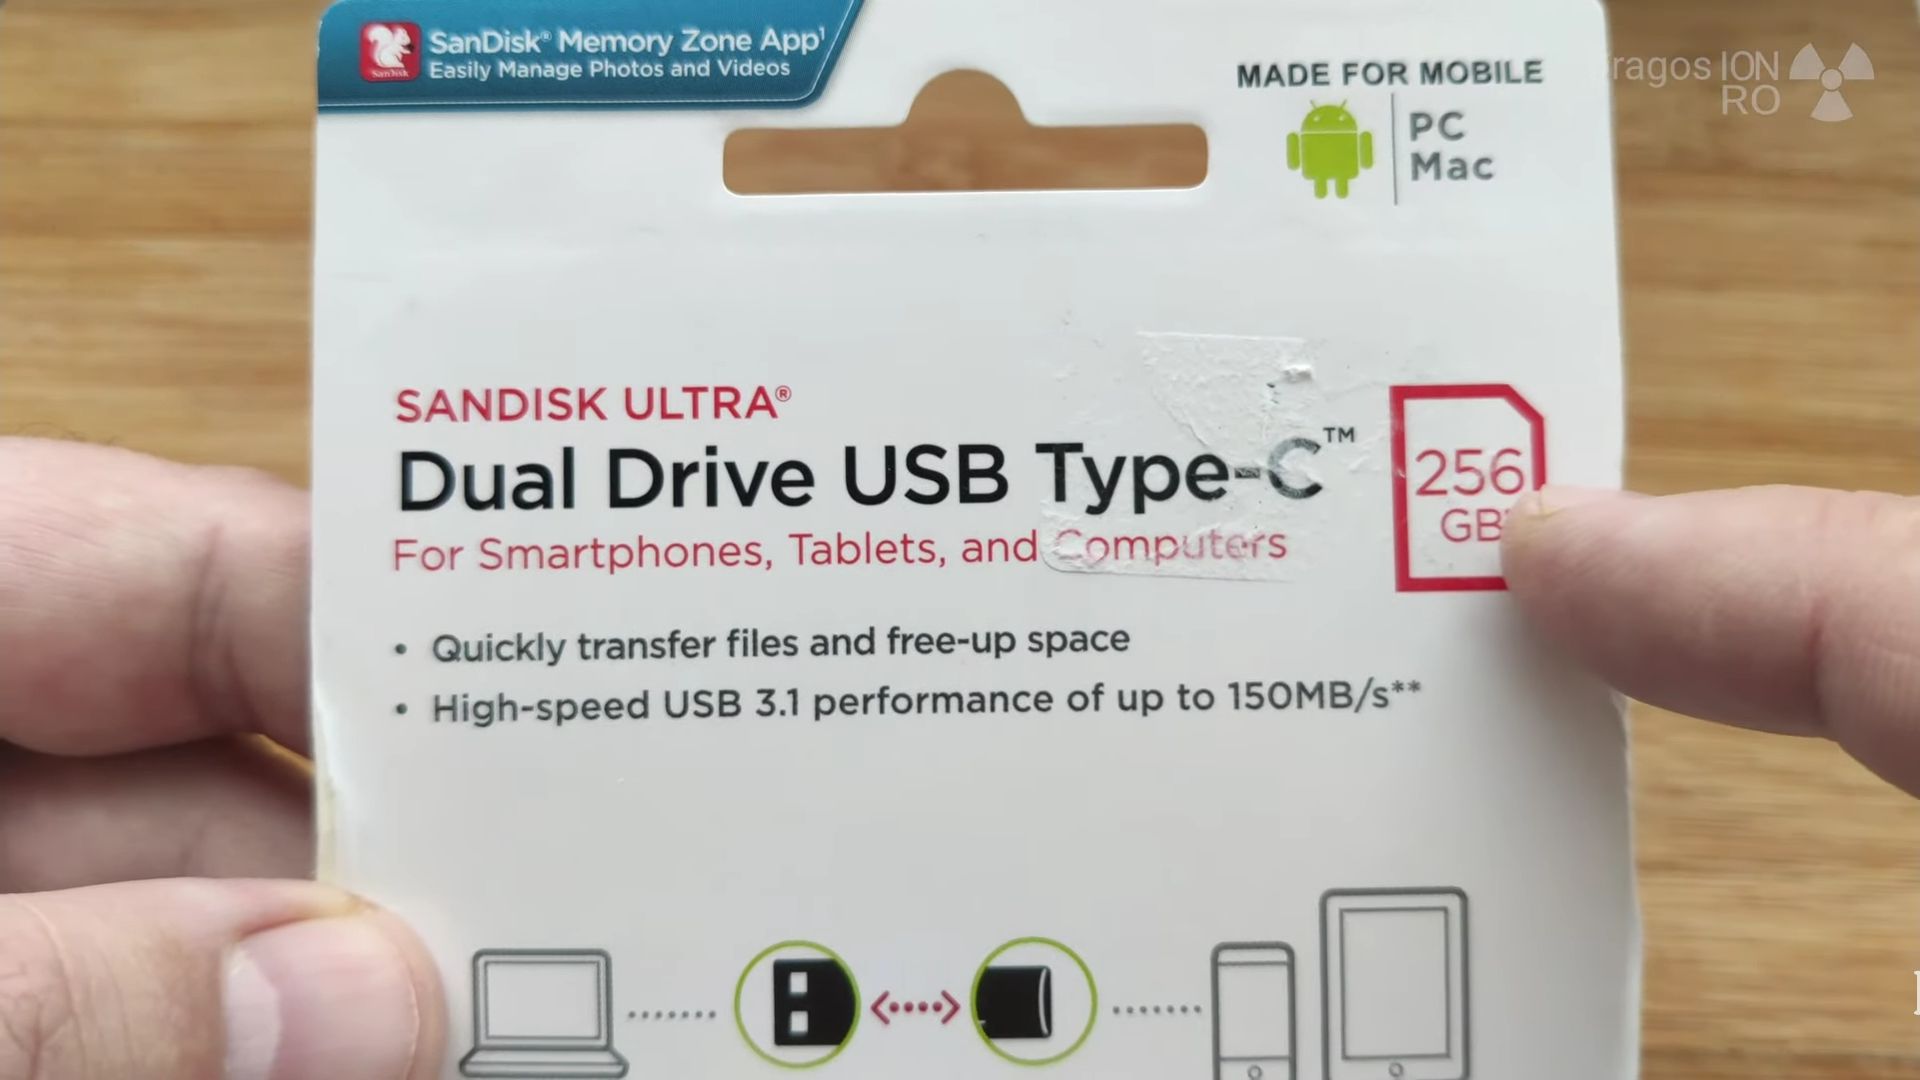 SanDisk Ultra Dual Drive USB C flash drive package back